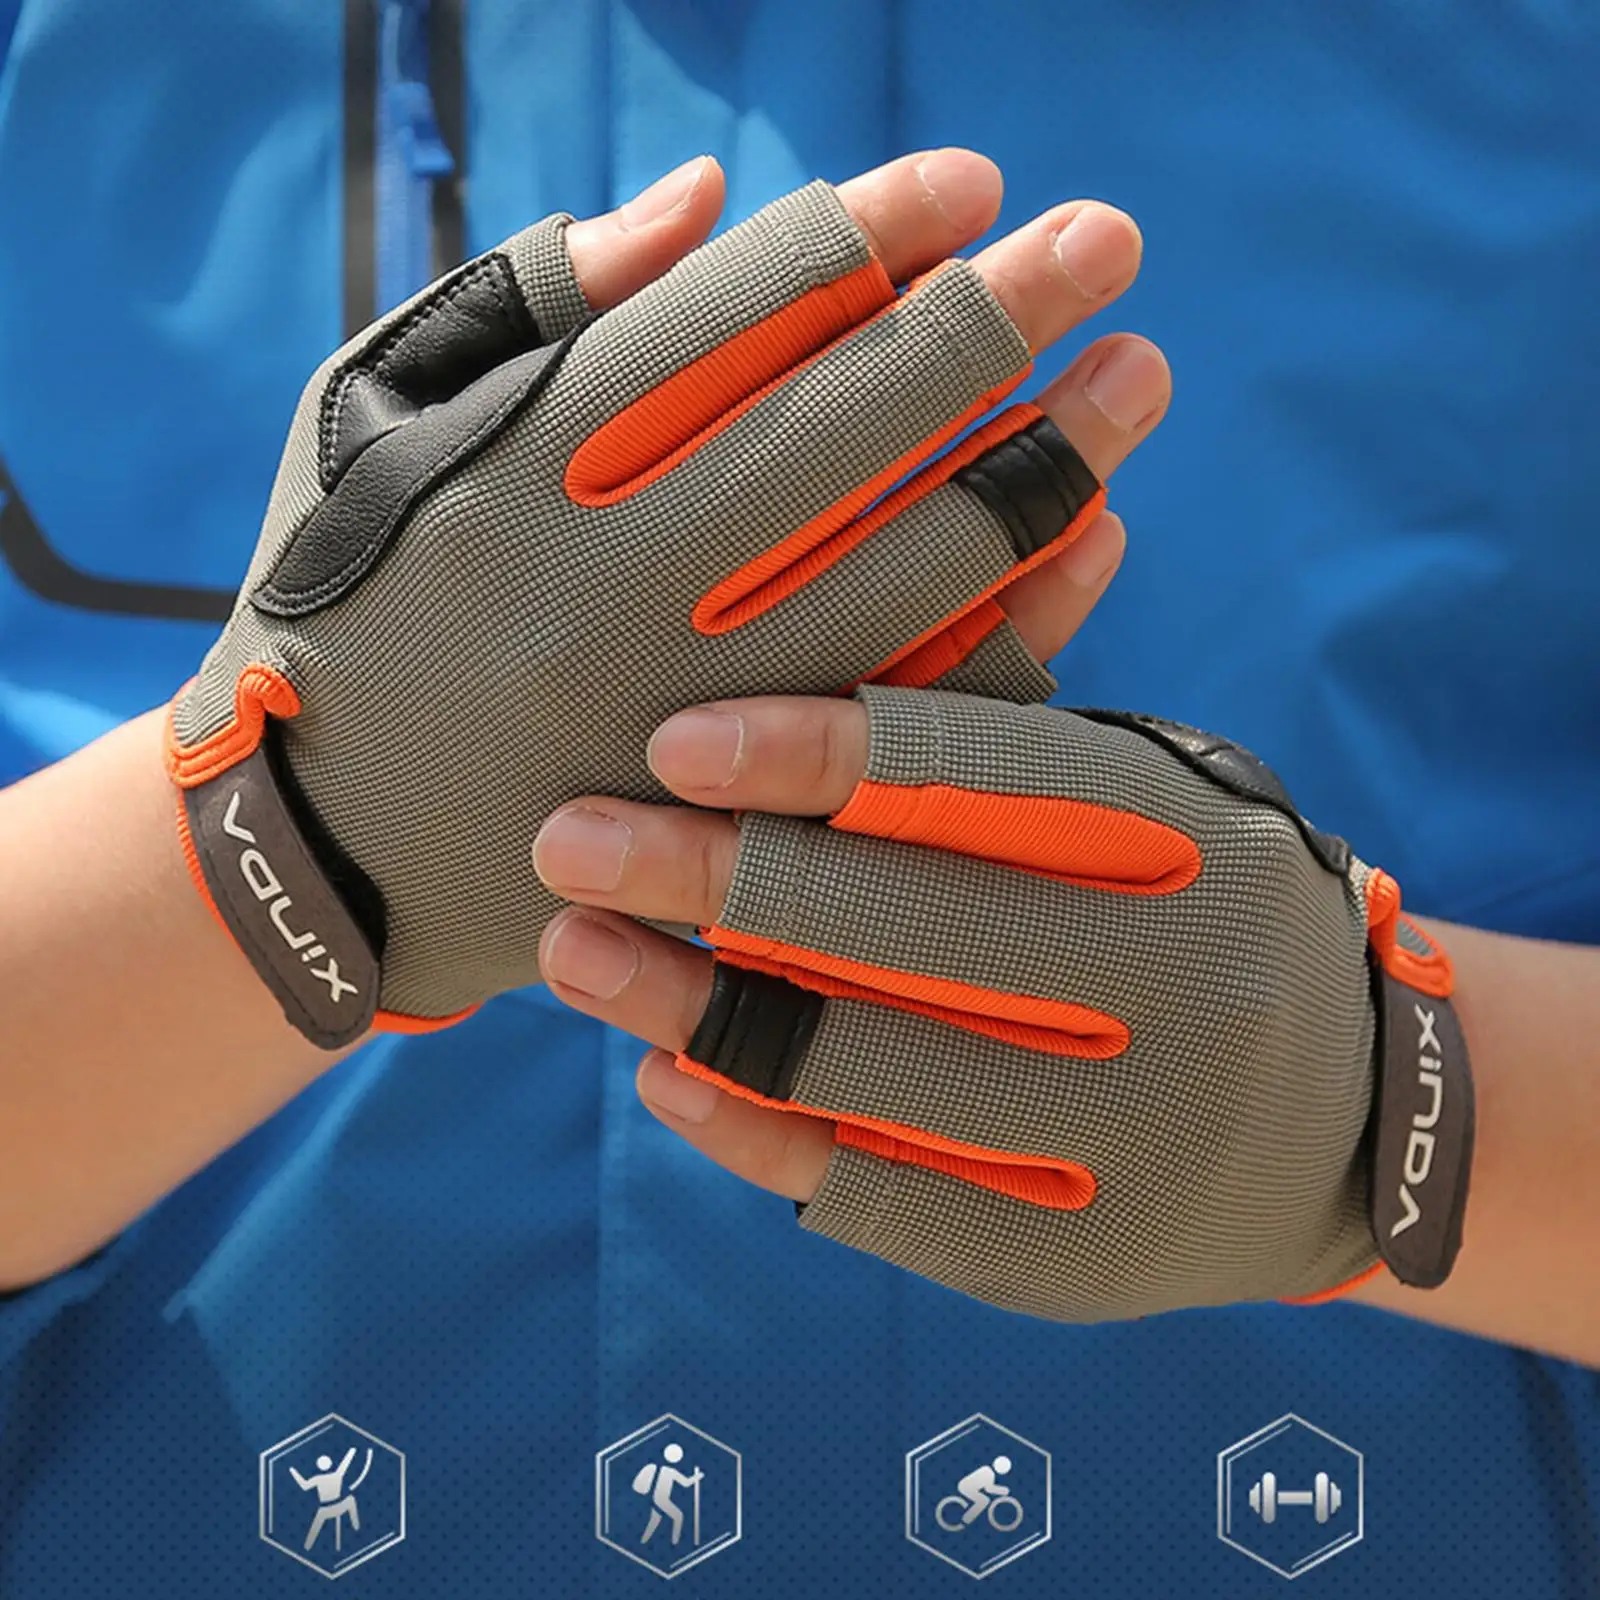 Half Finger Gloves Non Slip  Breathable Wear Resistant Gloves for Shooting  Motorcycle Climbing Men